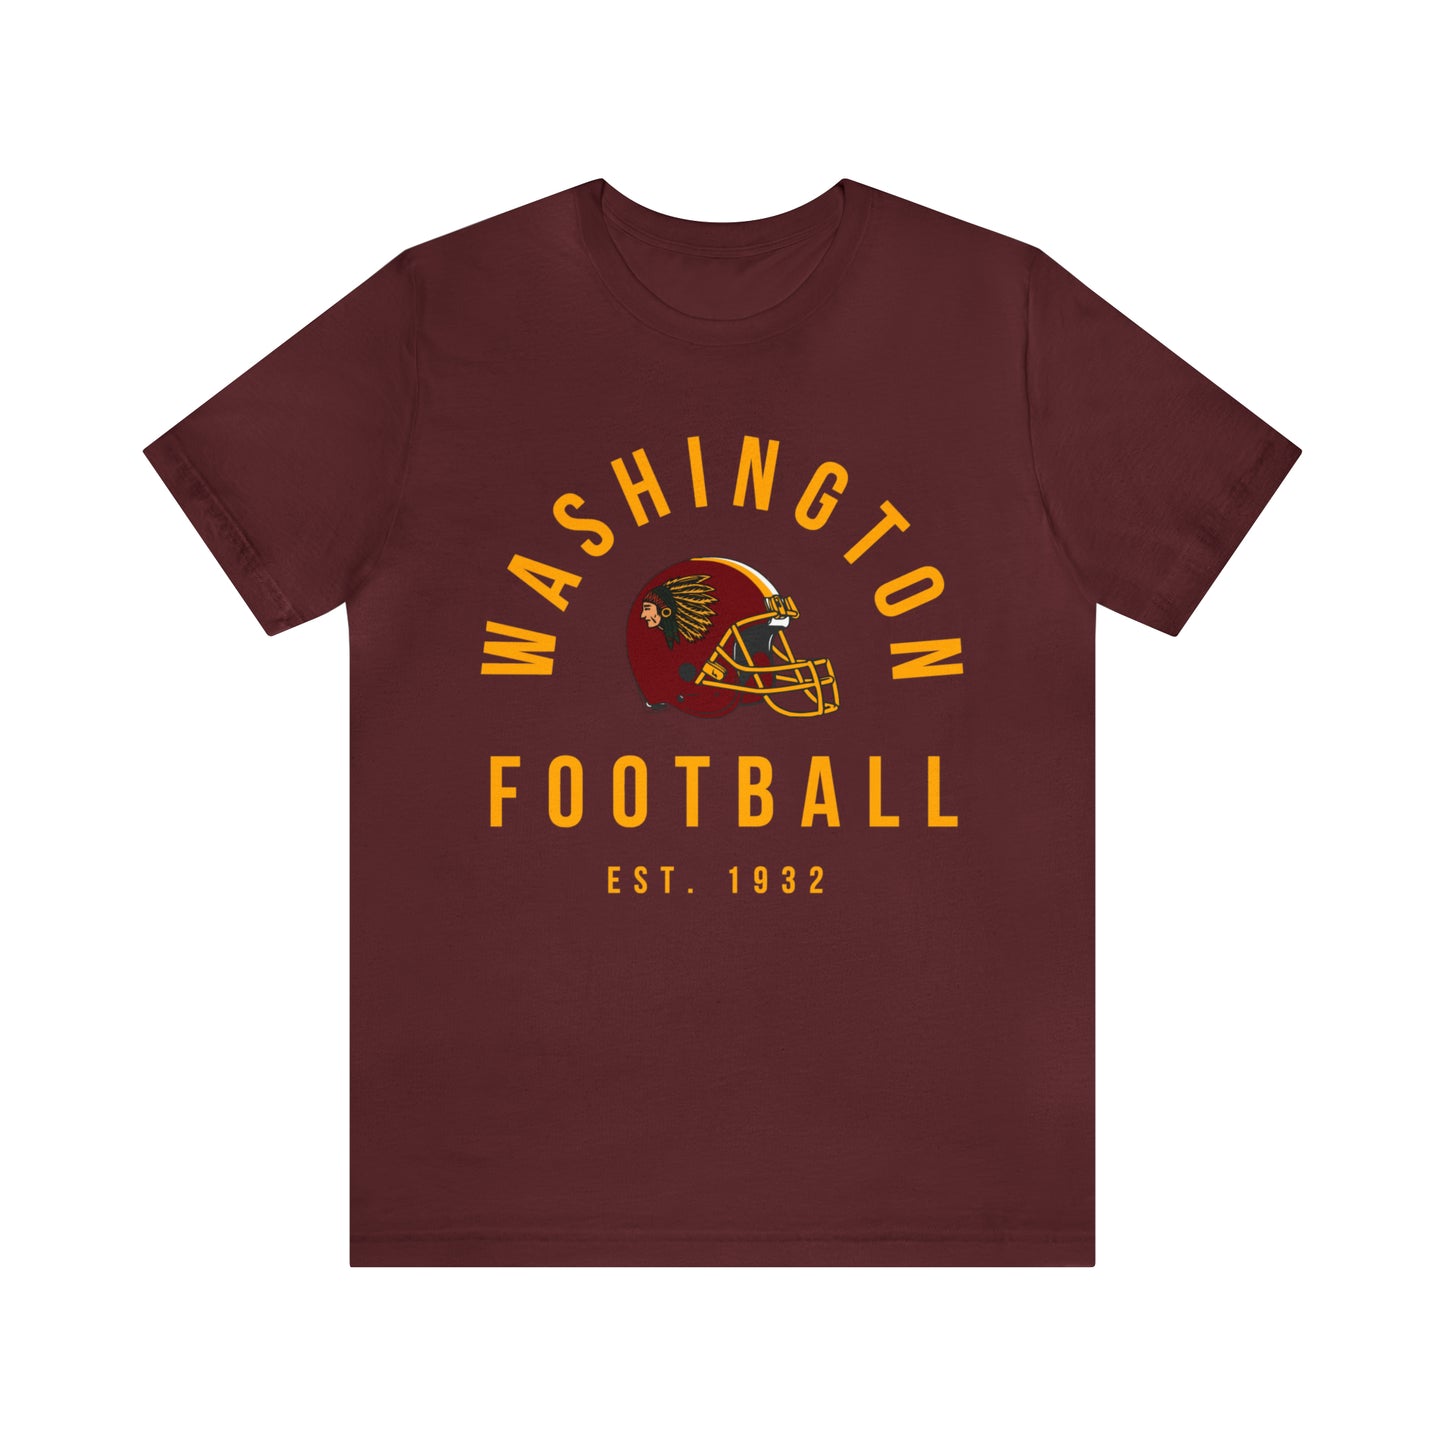 Throwback Washington Redskins Short Sleeve T-Shirt - Vintage Football Tee - Retro Commanders 70's, 80's, 90's - Design 2